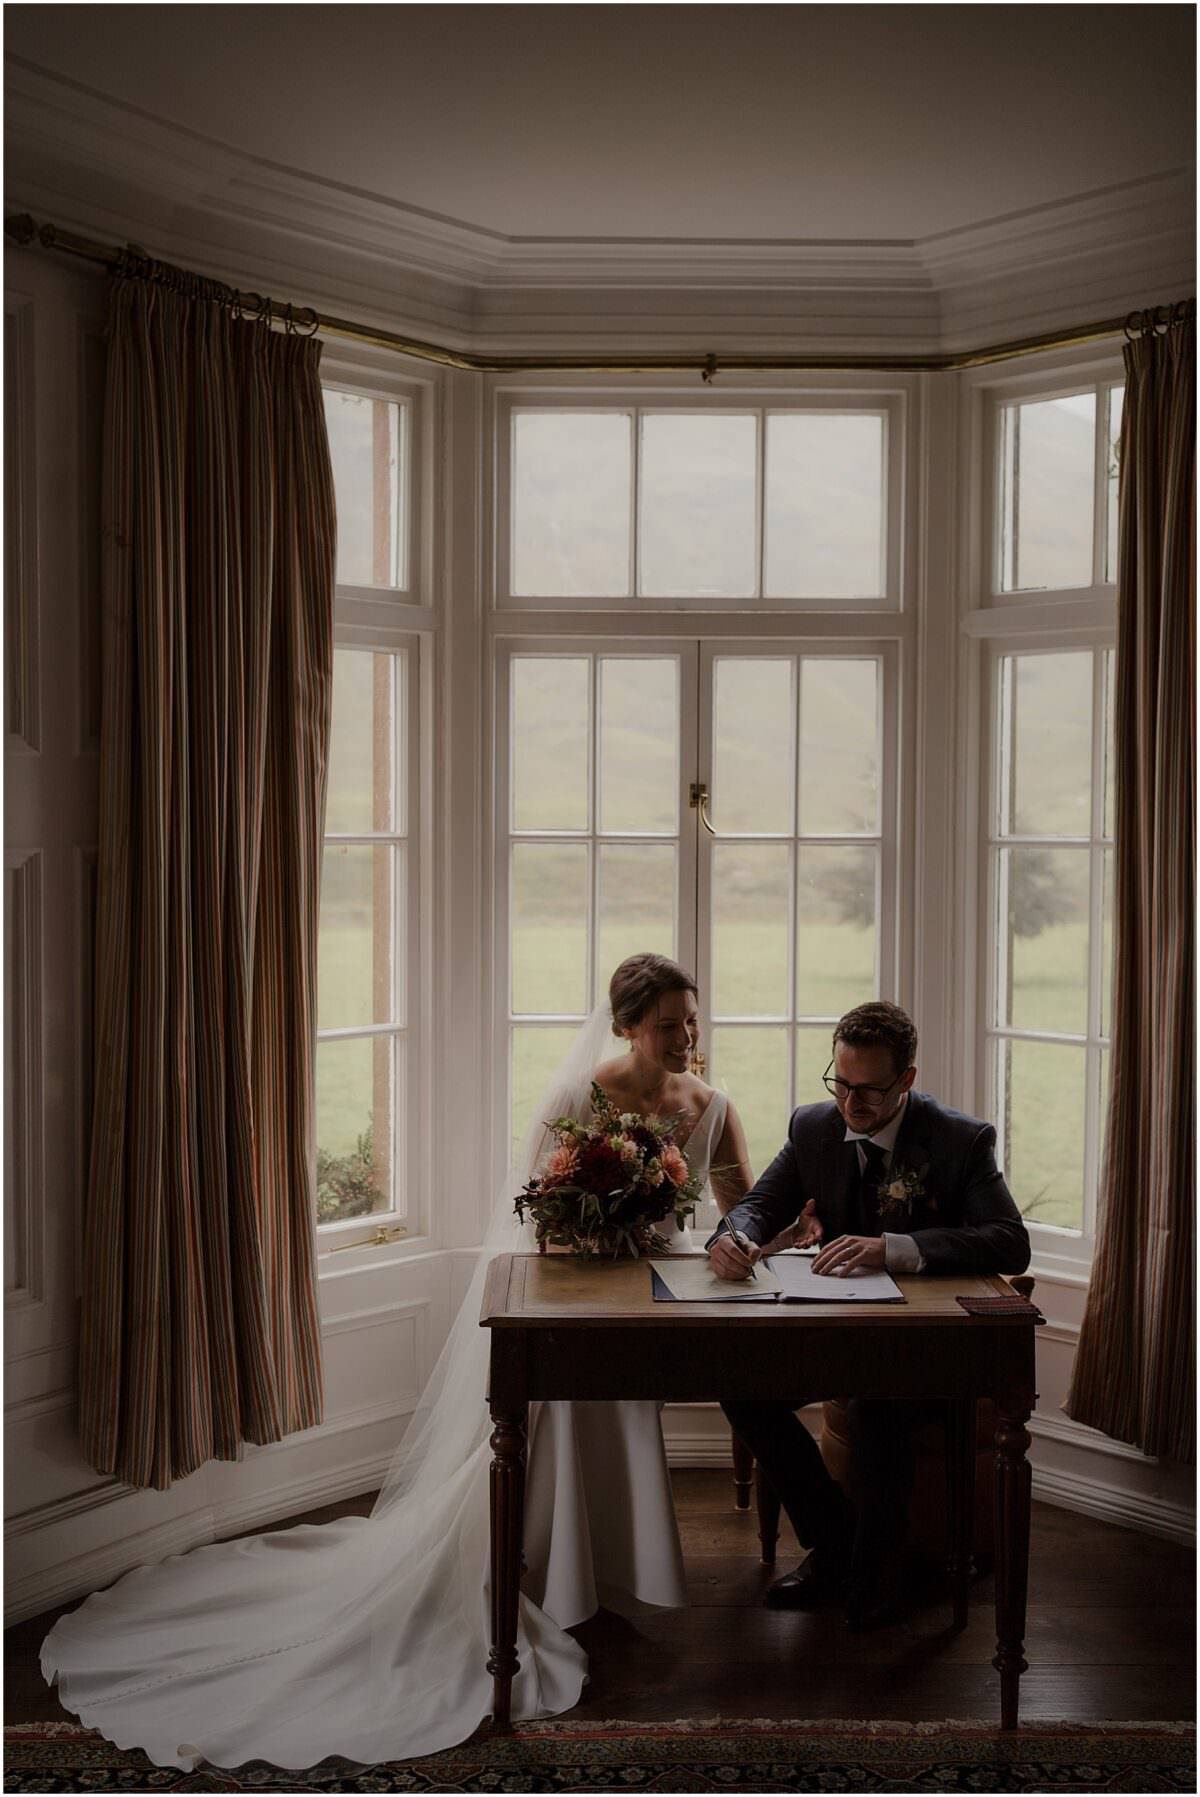 Dalness Lodge (Estate) wedding in Glen Etive - Glencoe wedding photographer